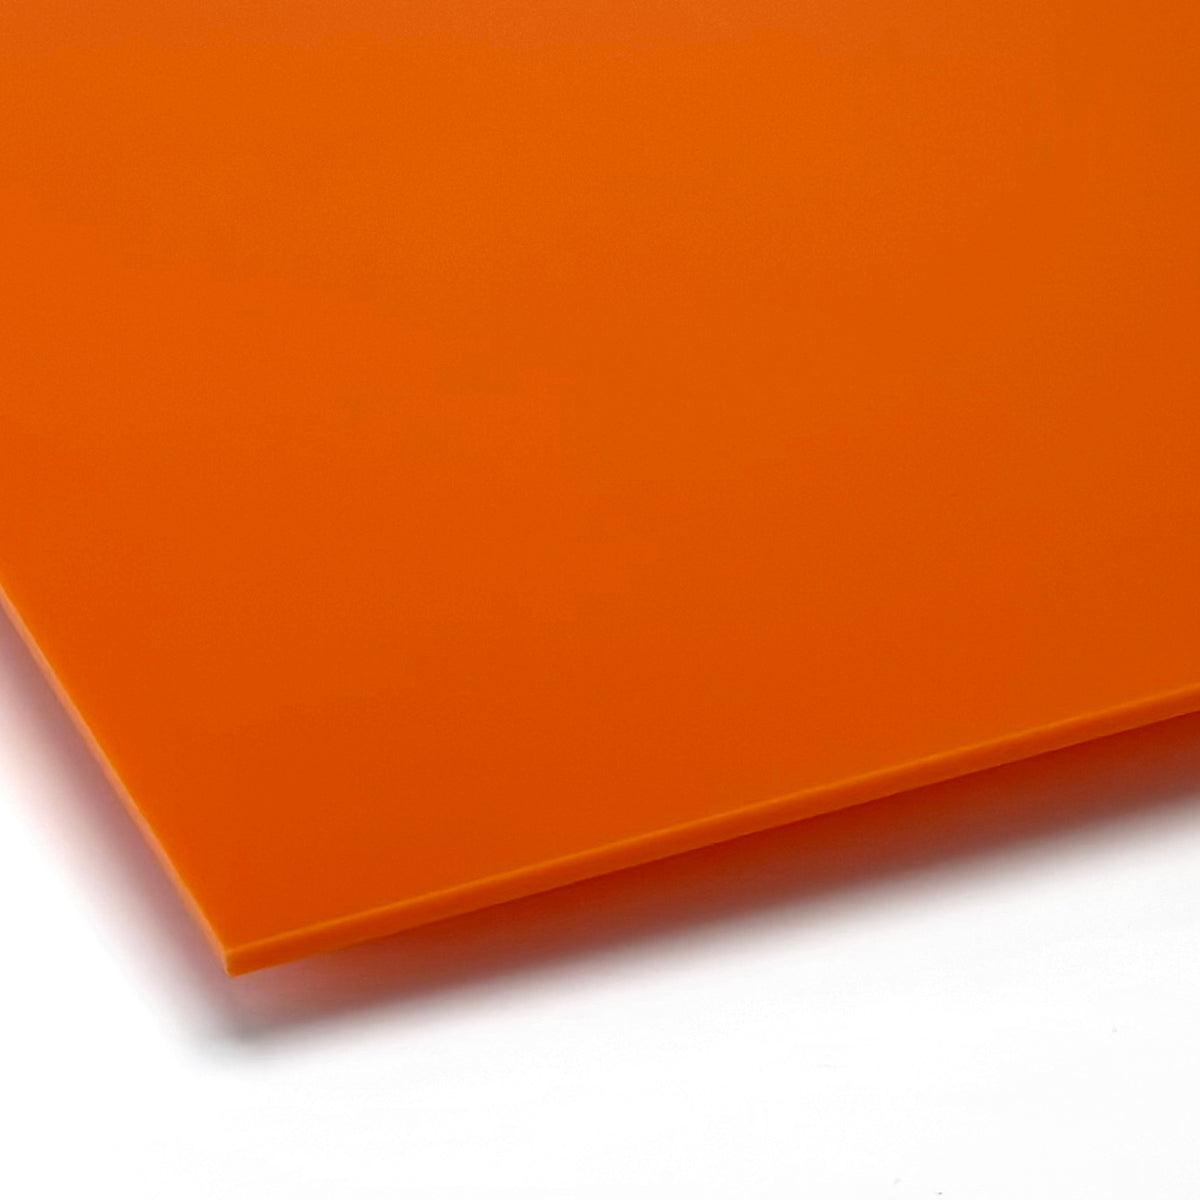 Orange Acrylic with laser cutting & Printing - 600x400mm